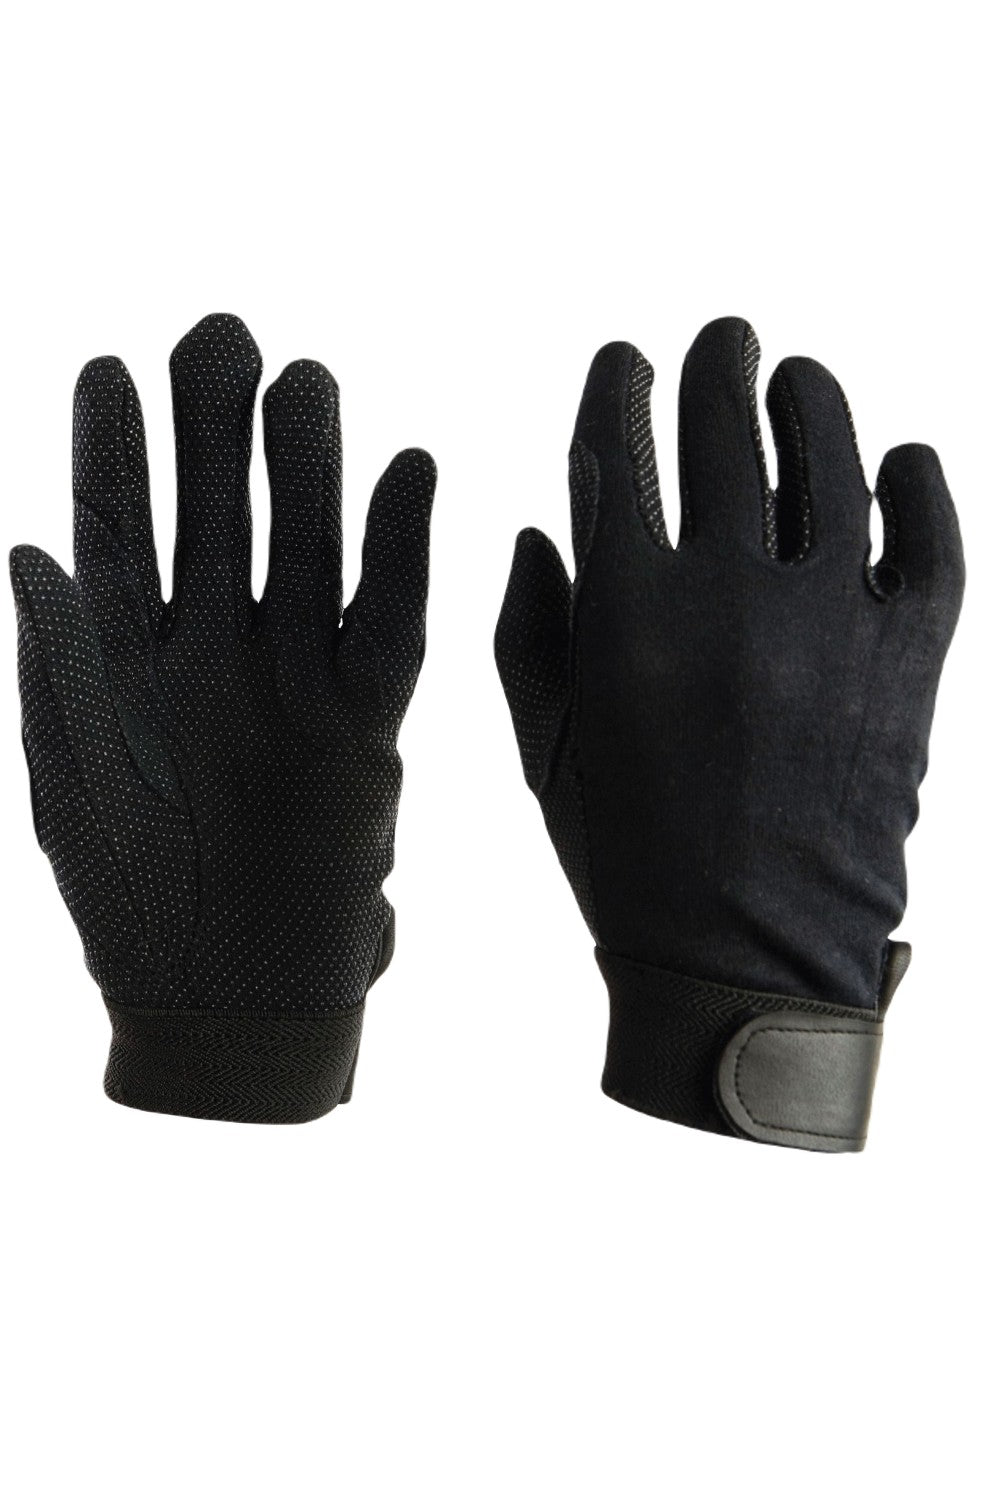 Dublin Track Riding Gloves In Black 